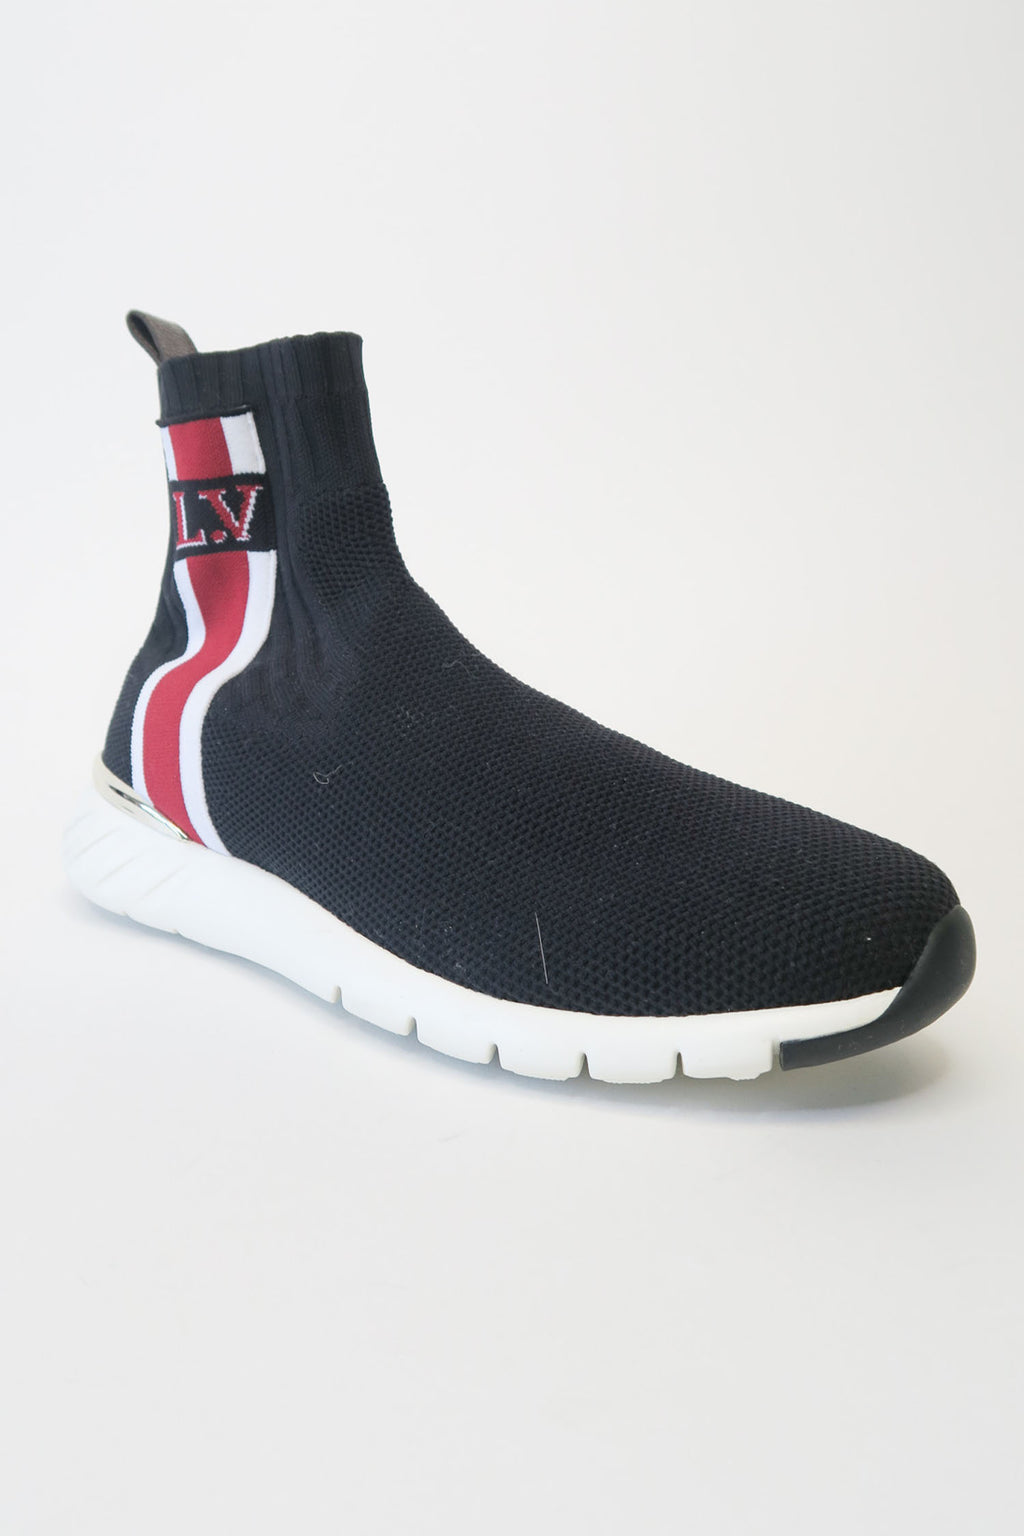 Louis Vuitton LV Monogram Grosgrain Trim Sock Sneakers sz 38